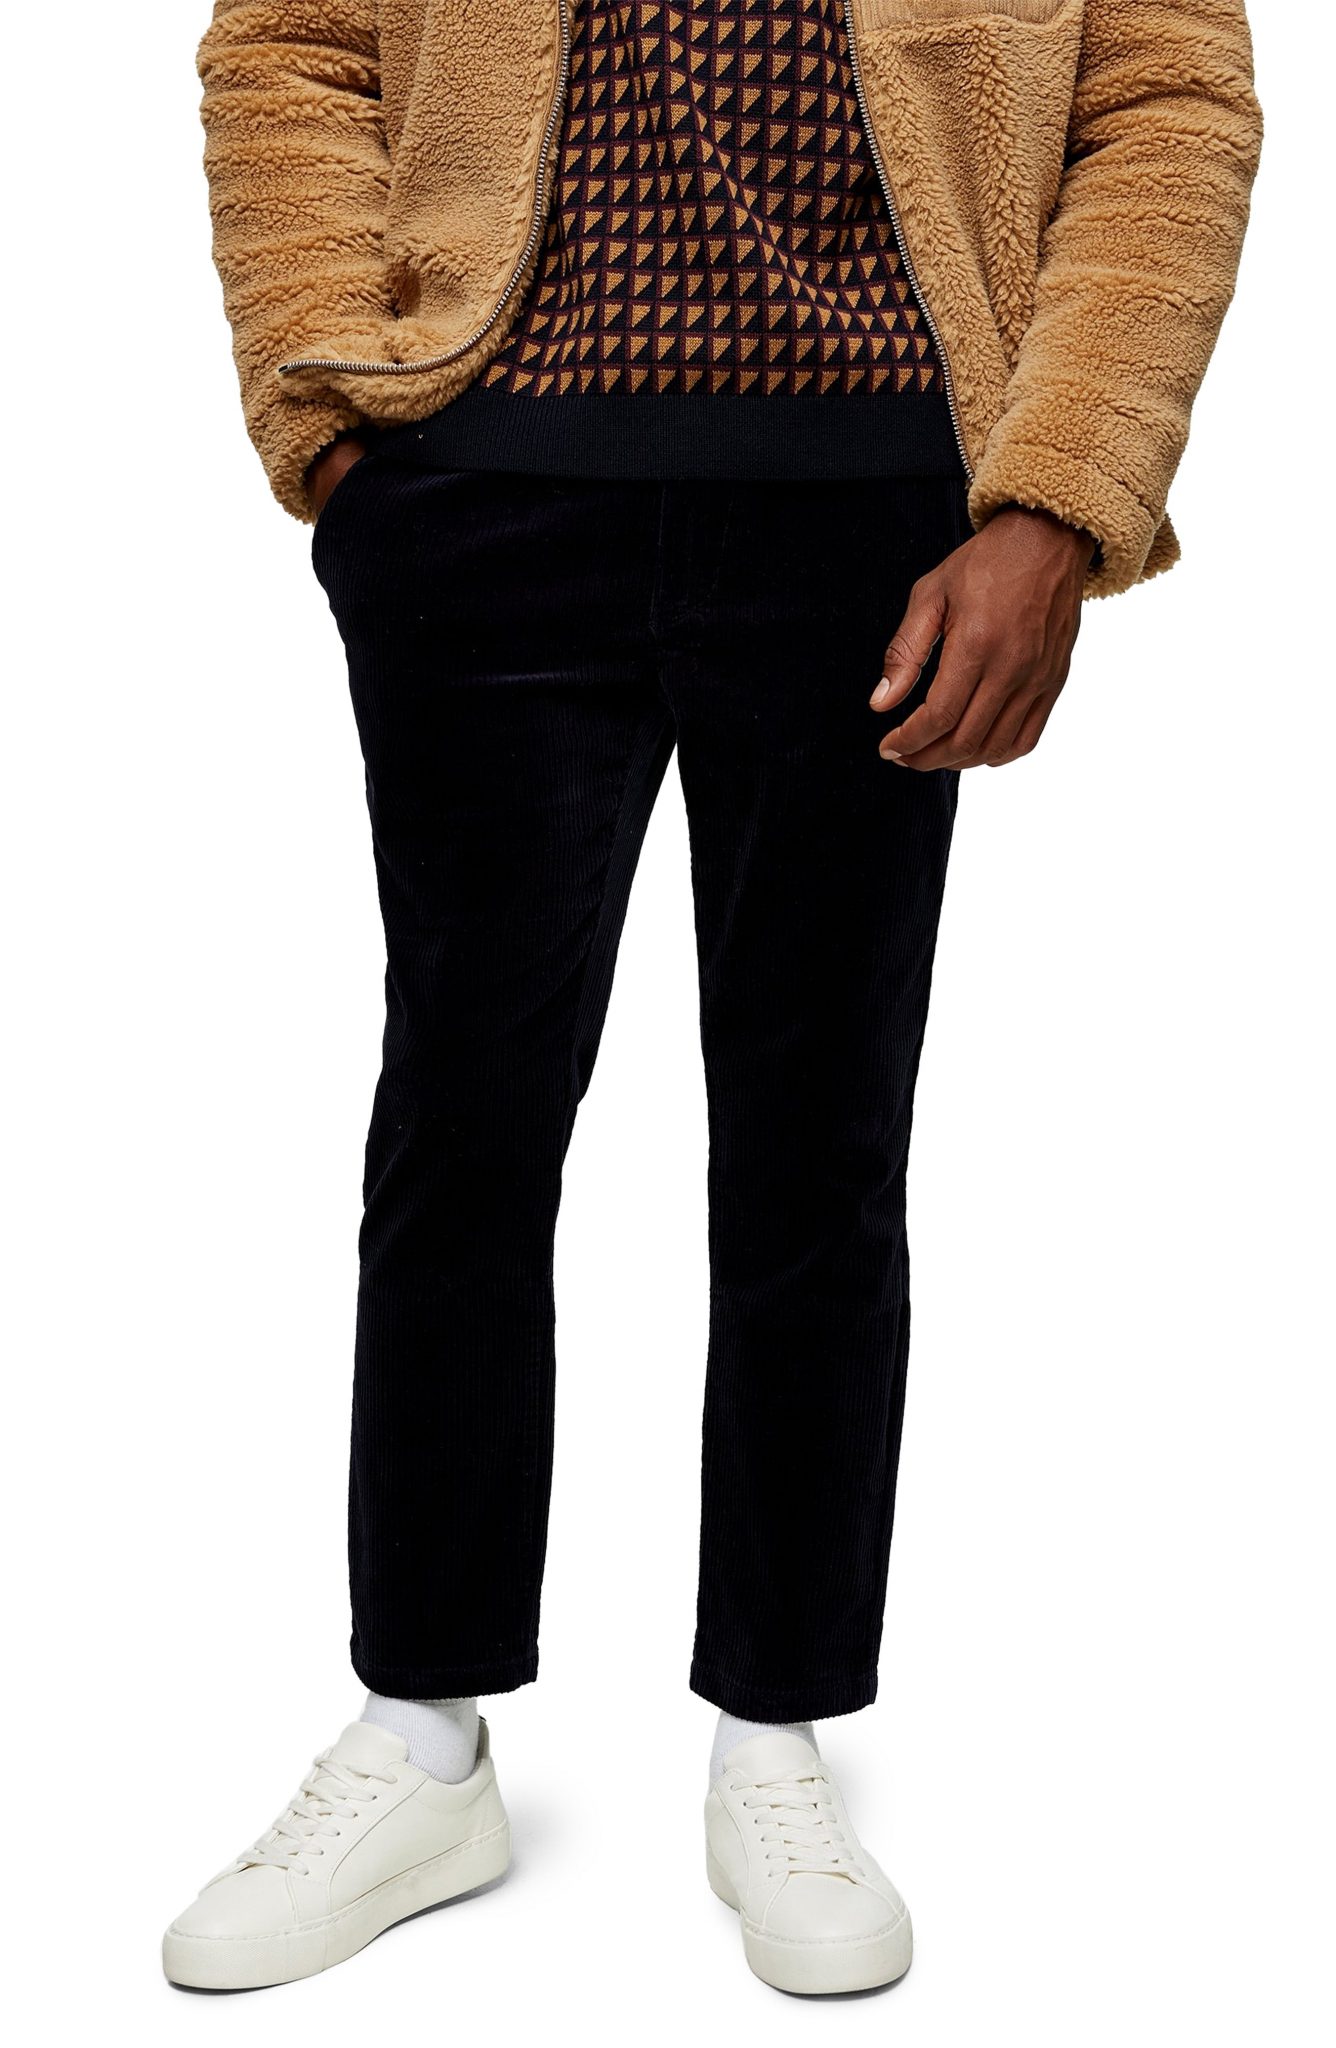 Men’s Topman Whyatt Corduroy Skinny Pants, Size 32 x 32 - Blue | The ...